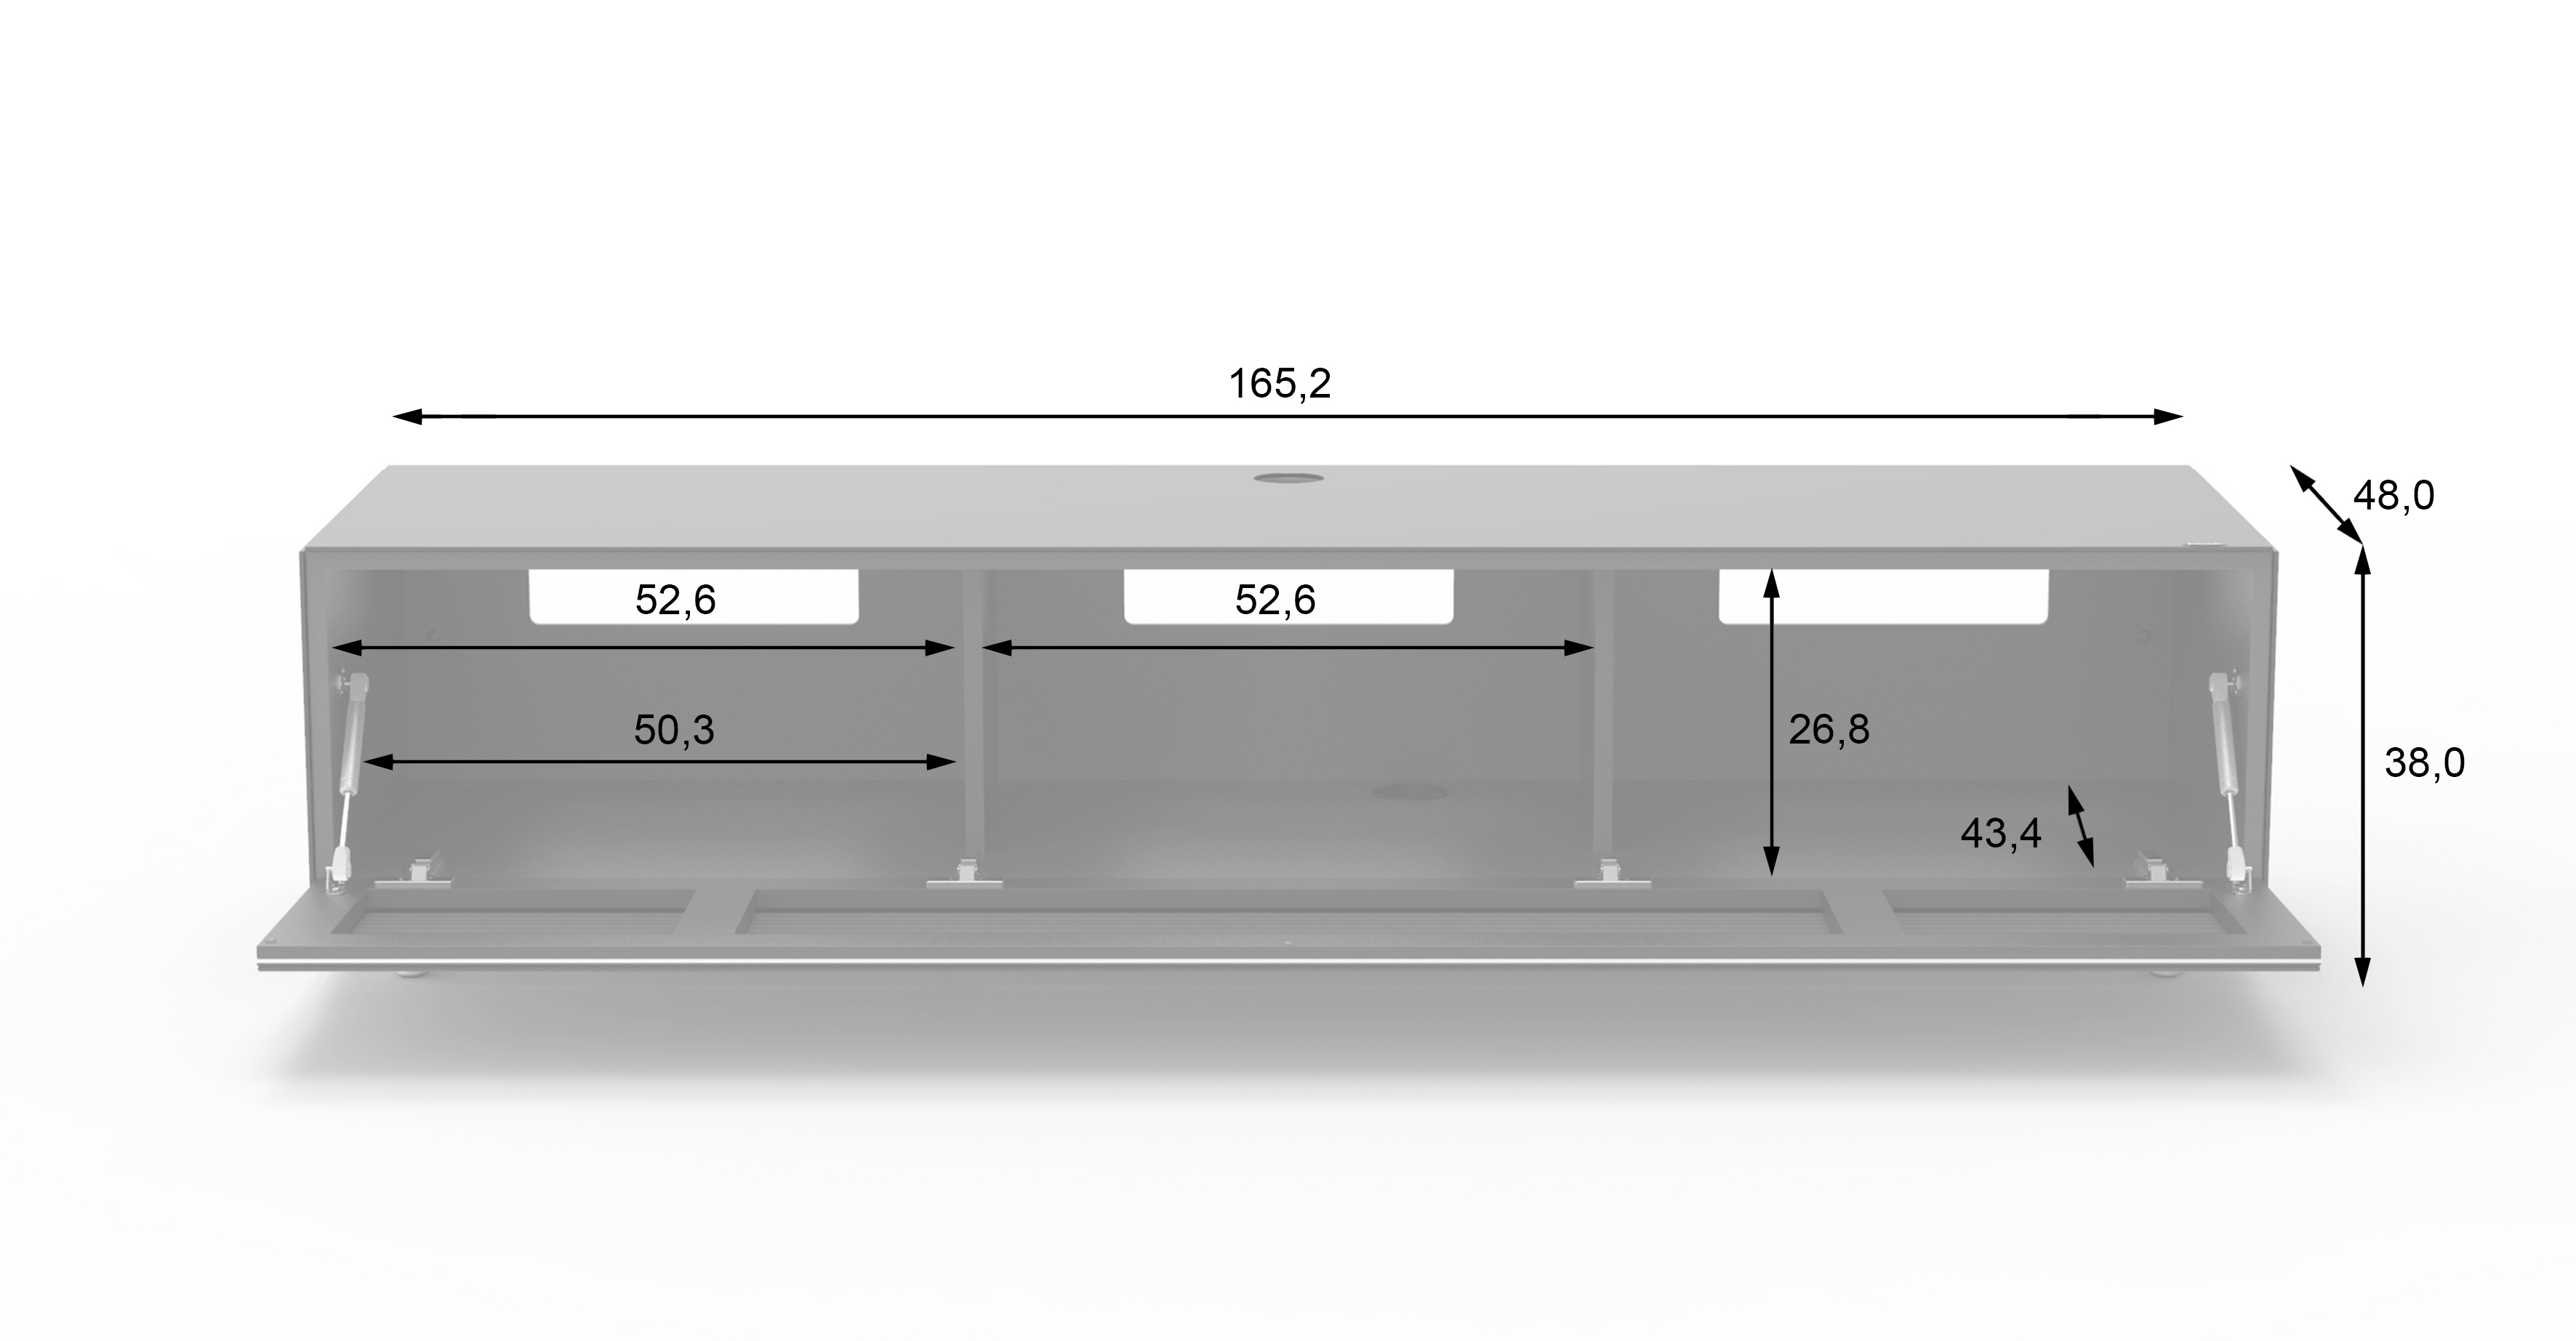 TV-Soundbar-Lowboard Breite BY 165cm. JUST Black. VESA400. mit JRL SPECTRAL TV-Soundbar-Lowboard 1654T. TV-Halterung